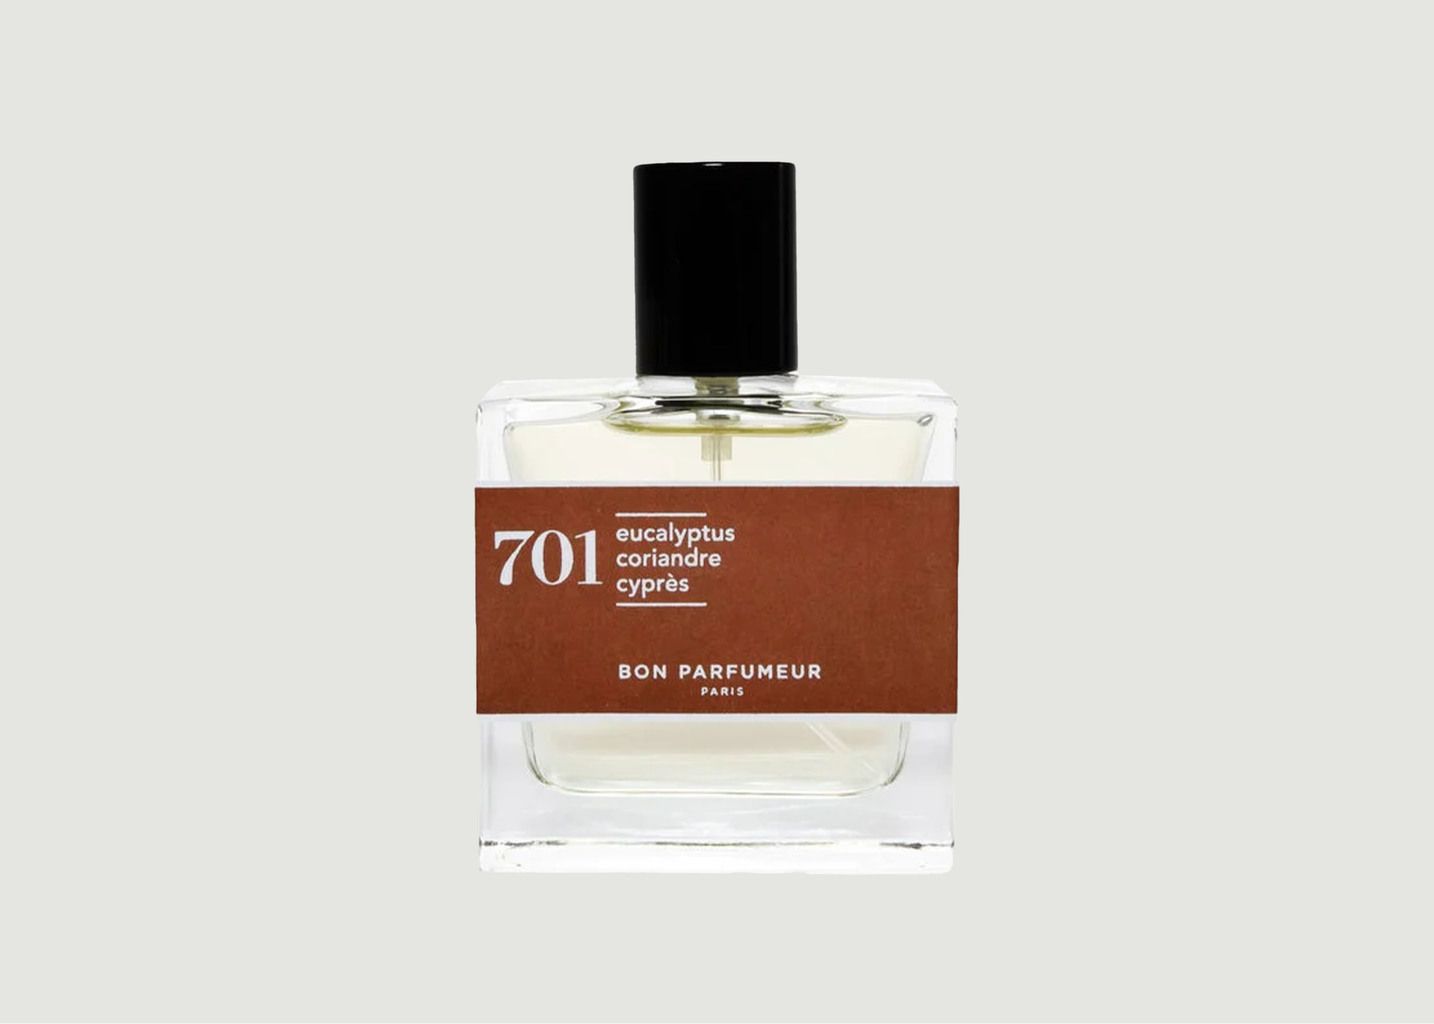 Eau de Parfum 701 : Eucalyptus, Coriander, Cypress - Bon Parfumeur